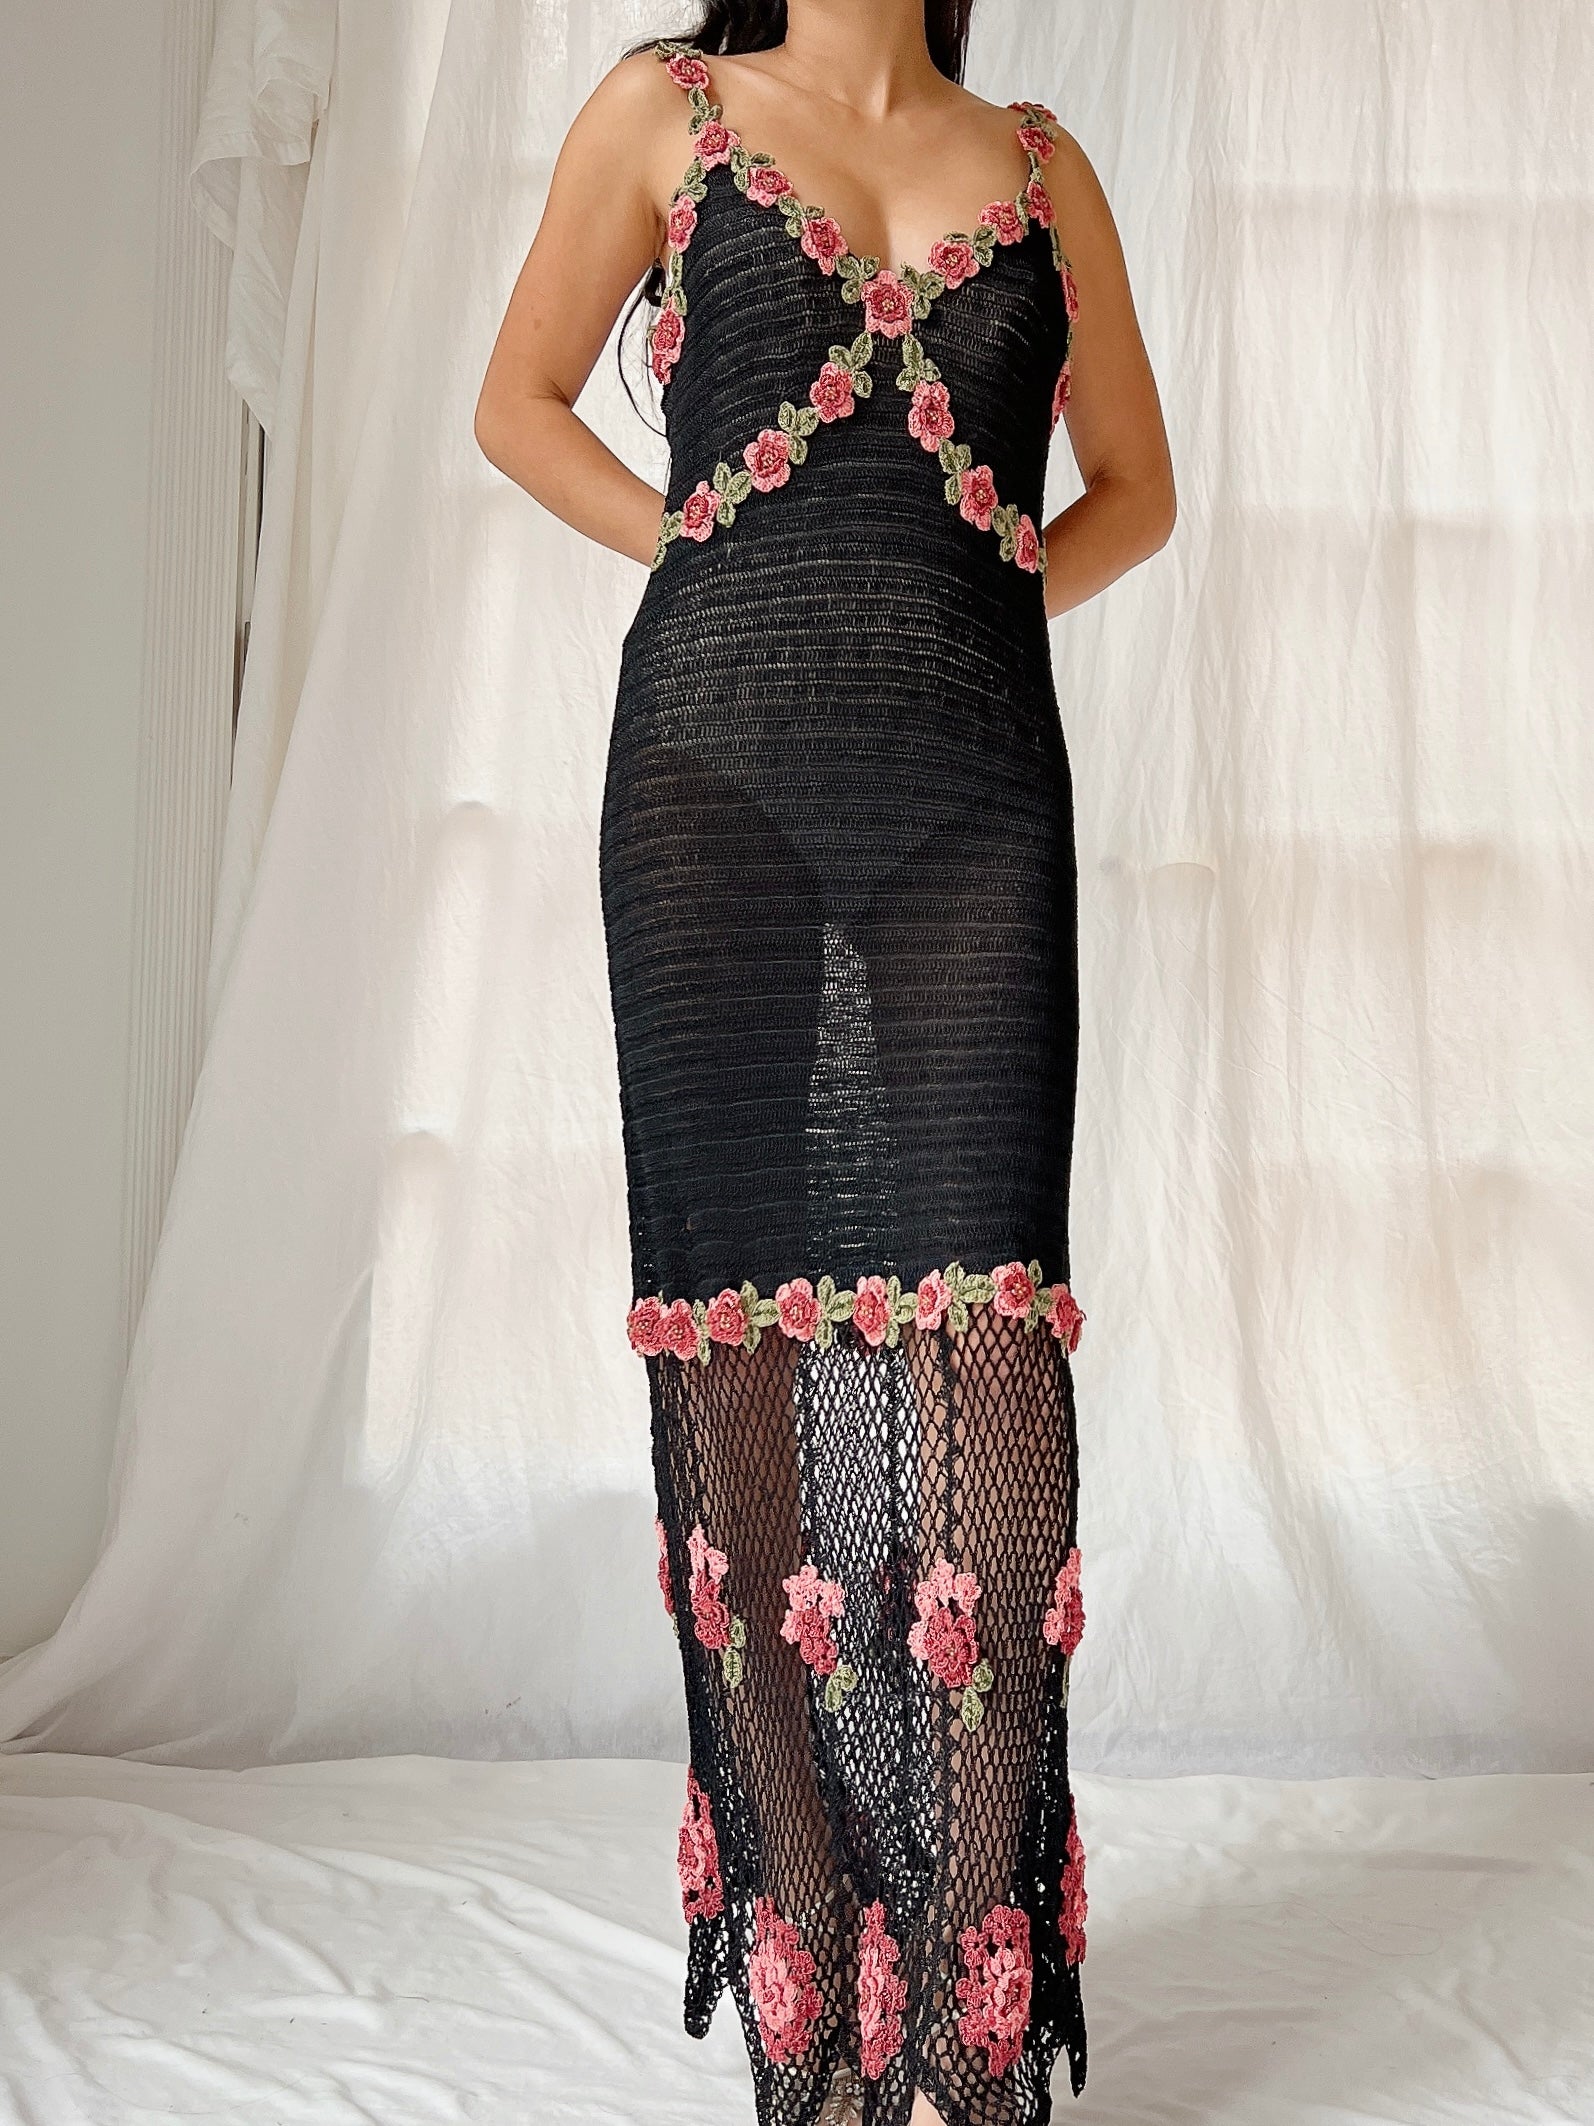 Vintage Crochet Dress with Floral Details - M